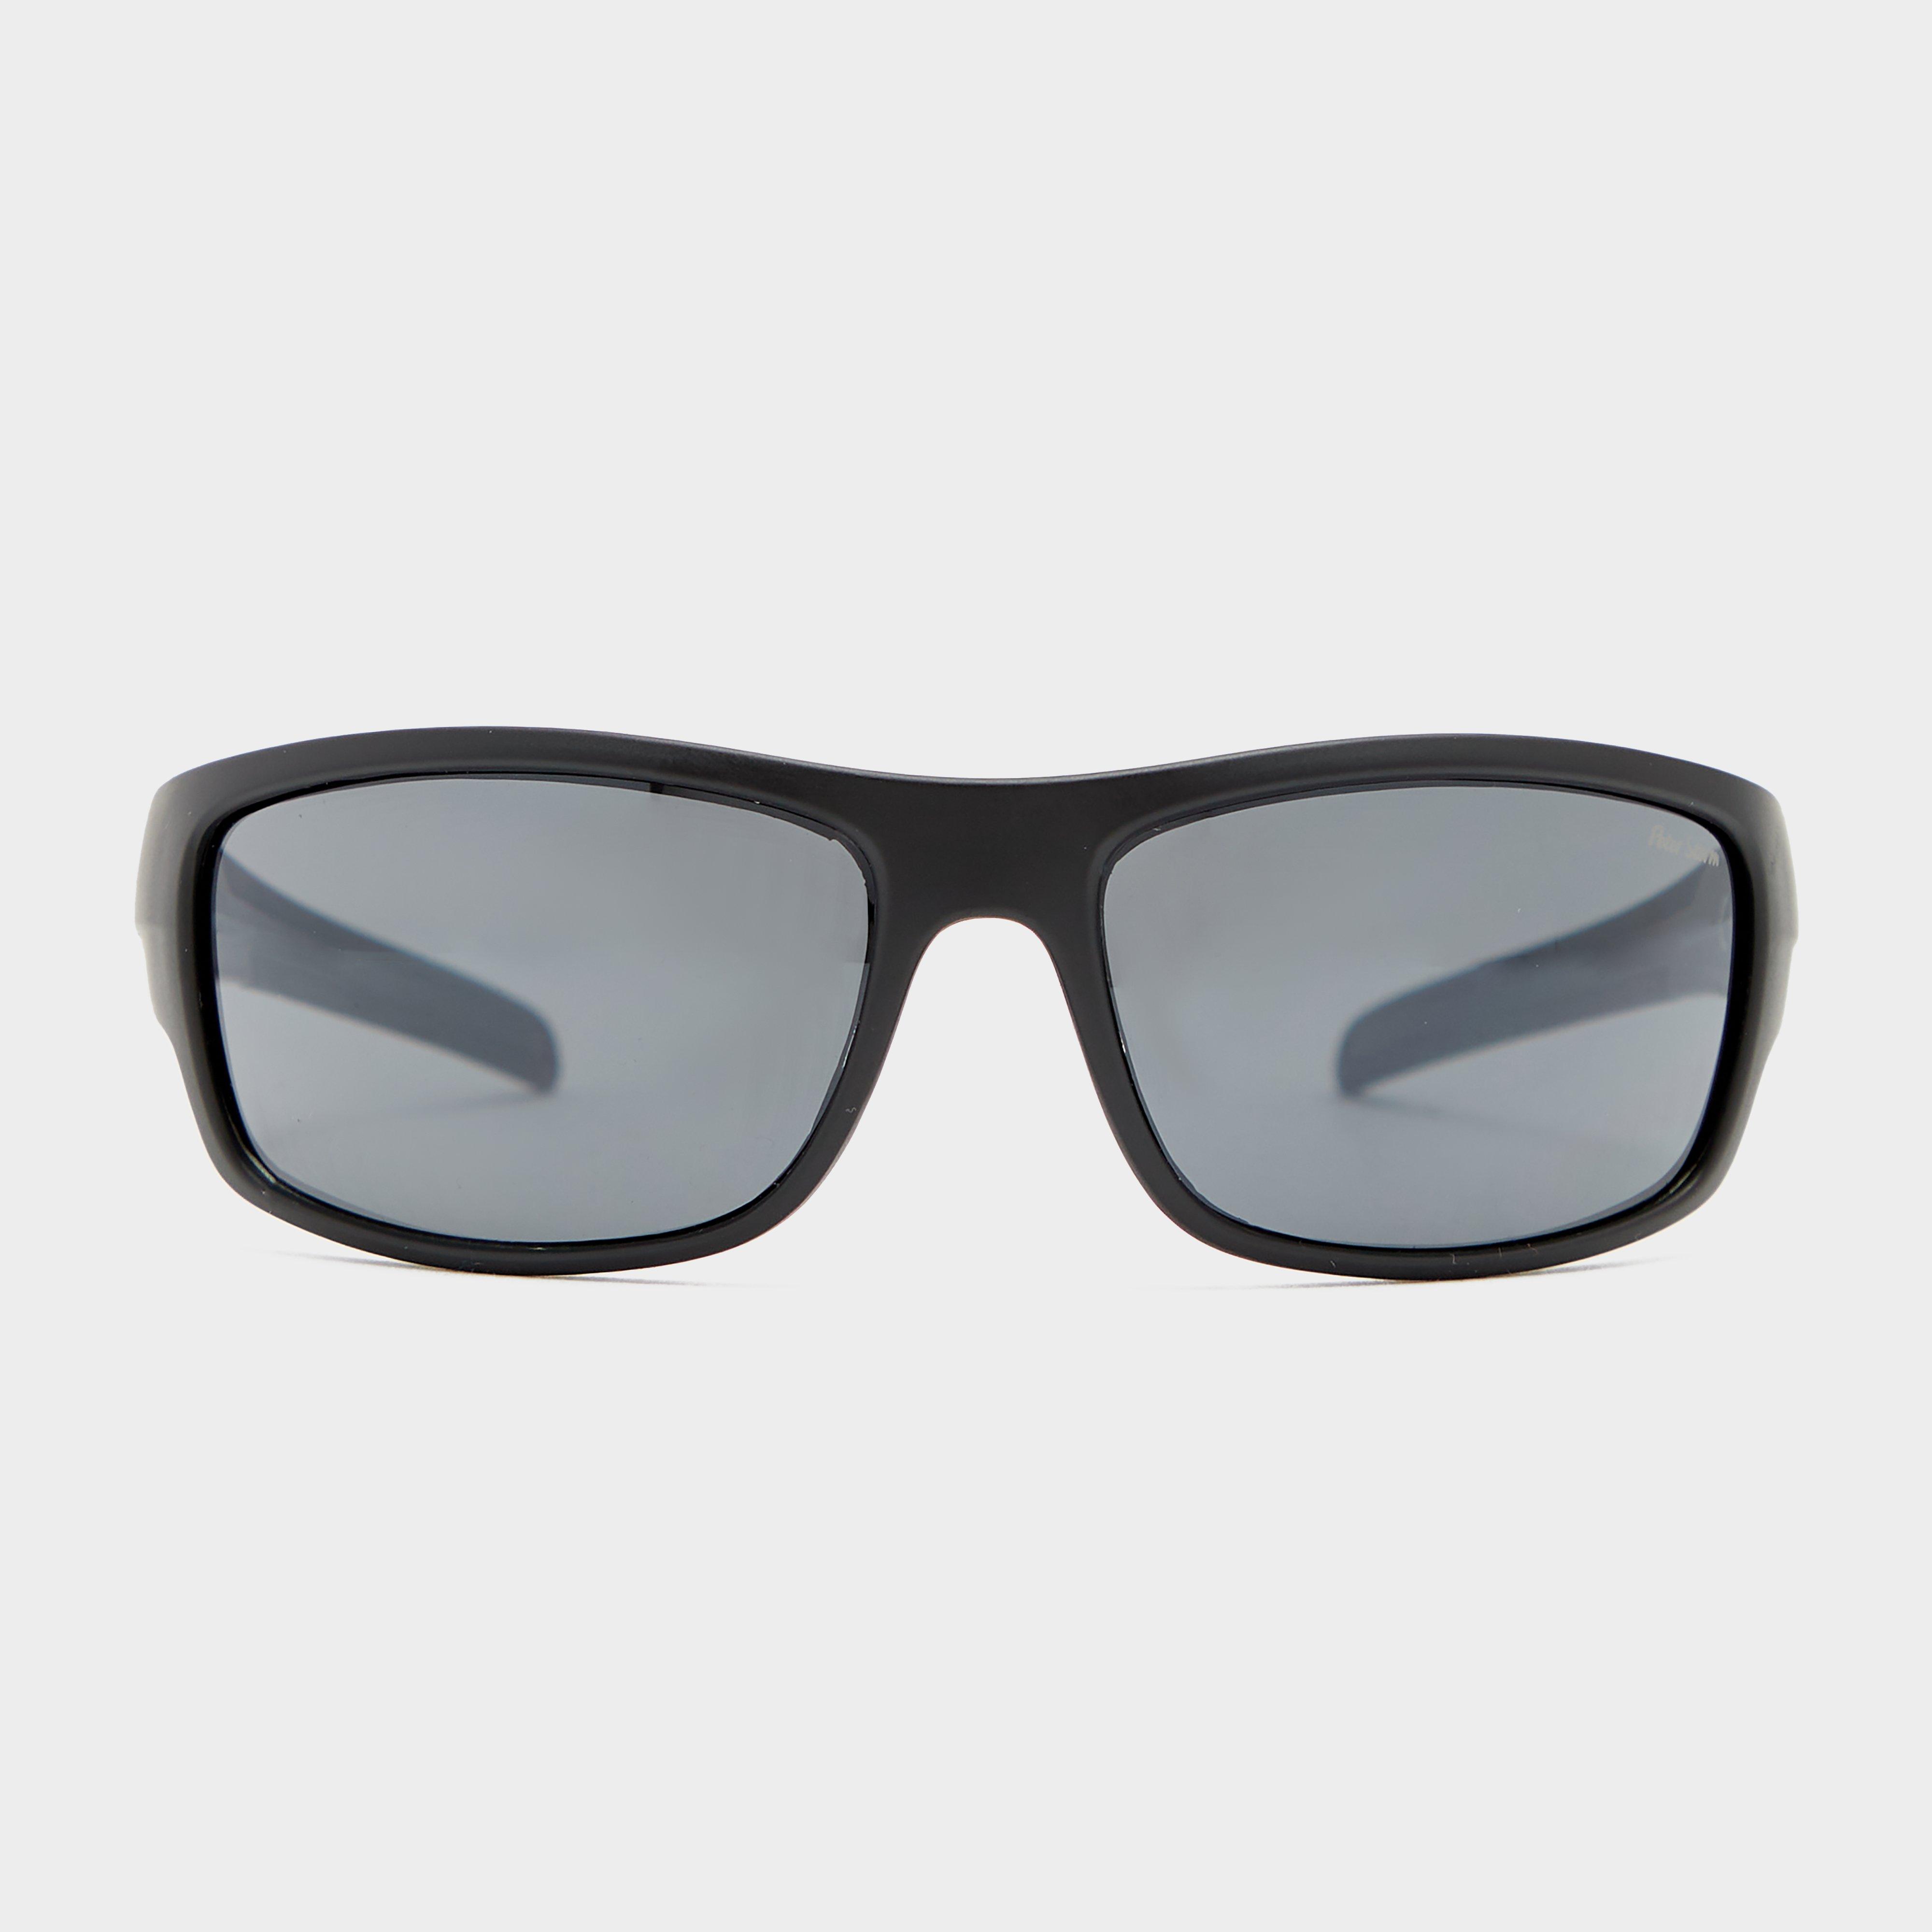 Image of Peter Storm Dartmouth Sunglasses - Blk, BLK